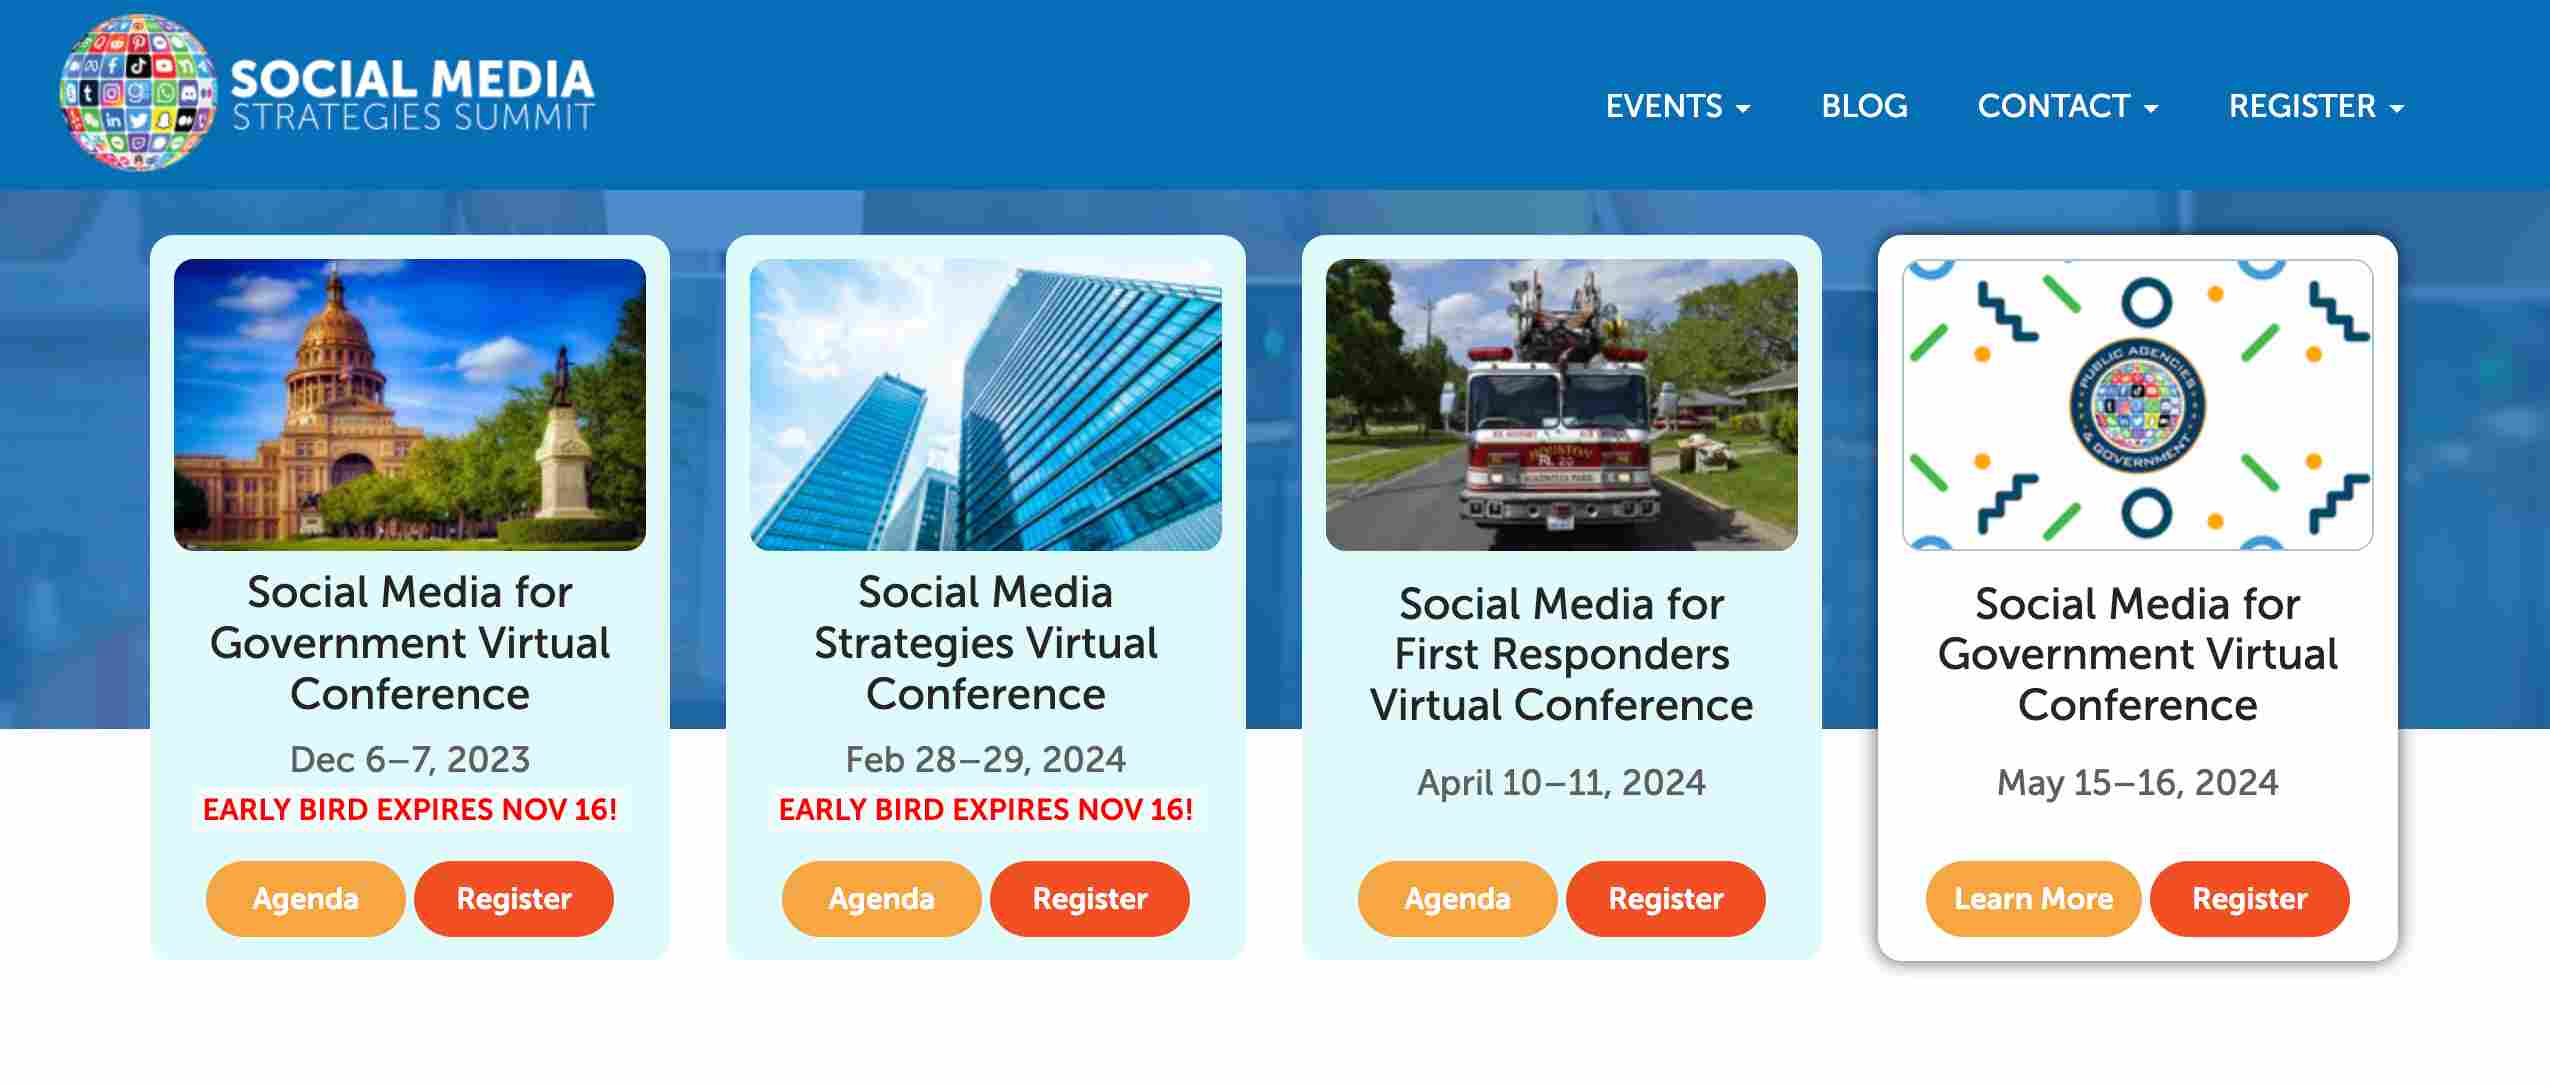 Digital marketing conferences: Social Media Strategies Summit